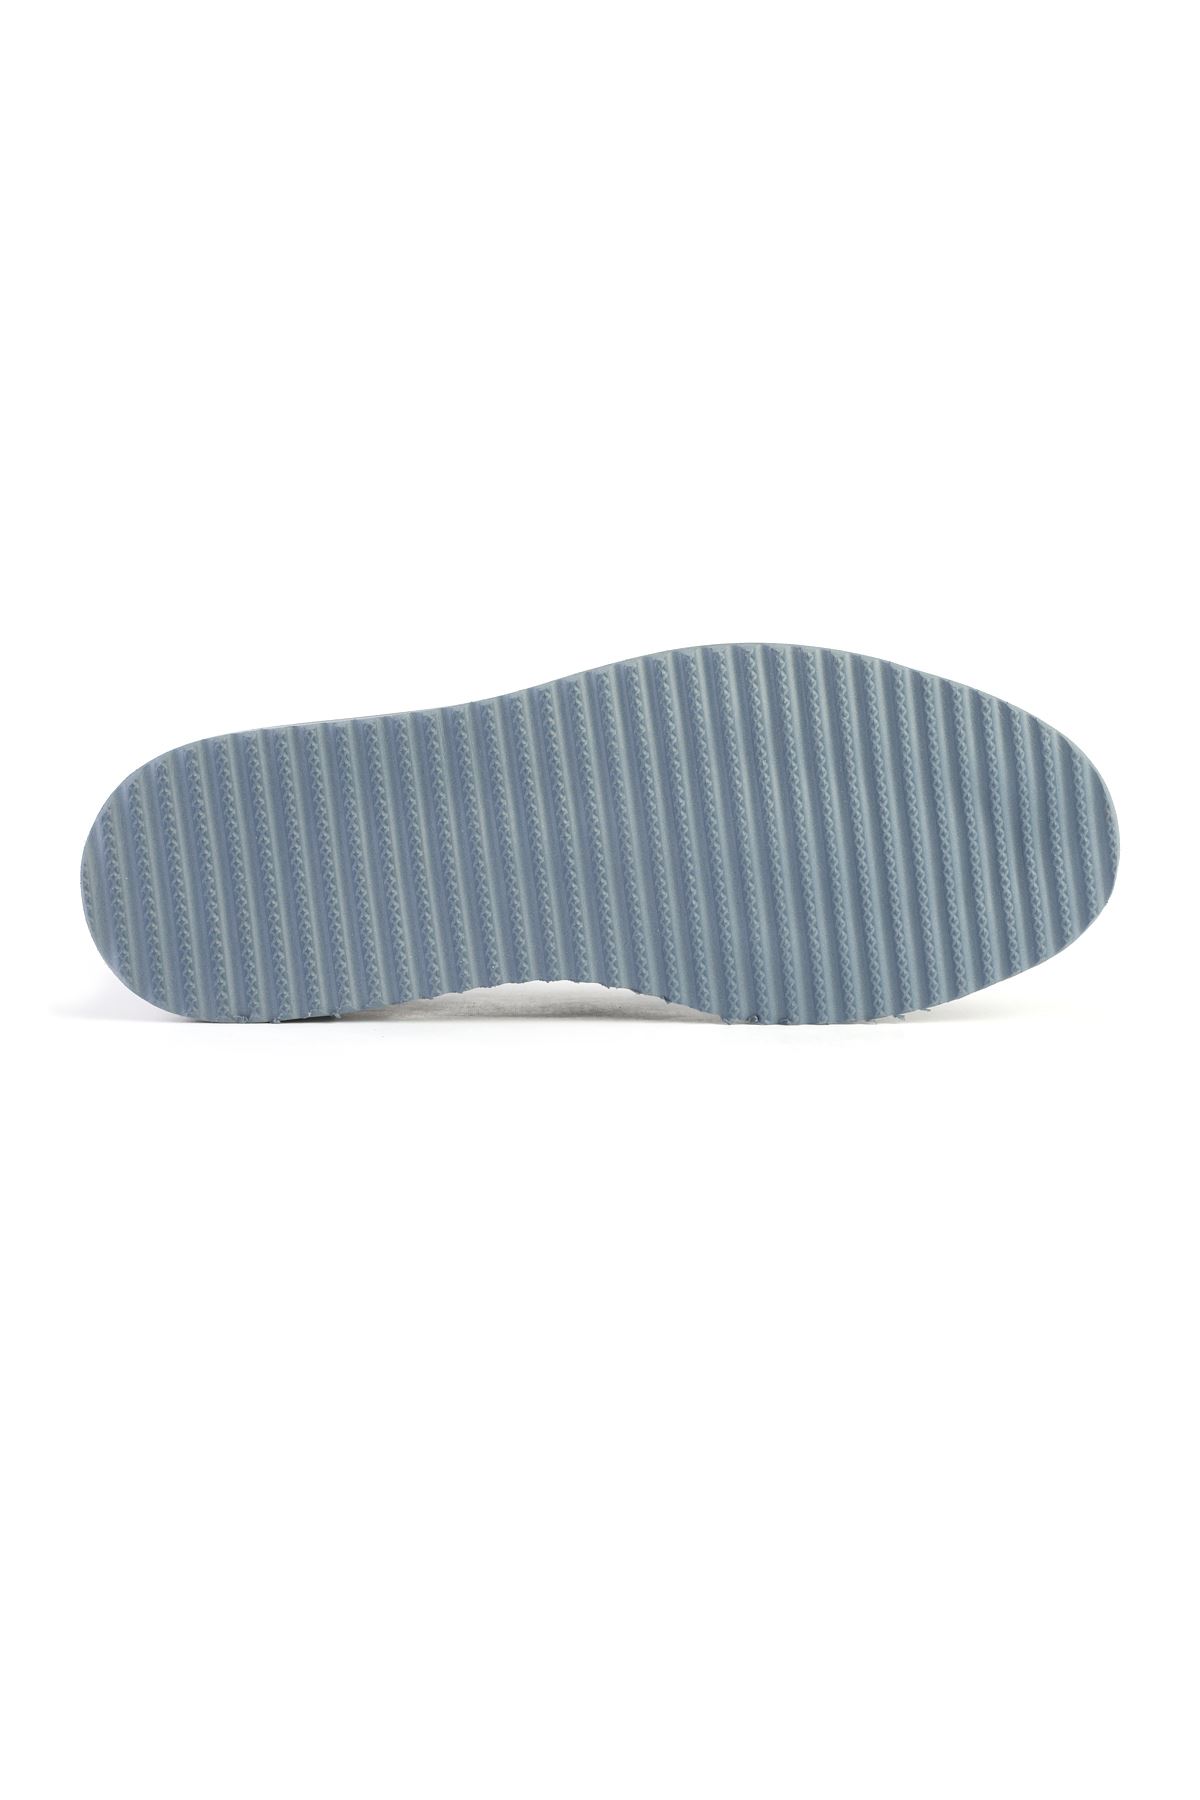 Libero 3295 Blue Loafer Shoes